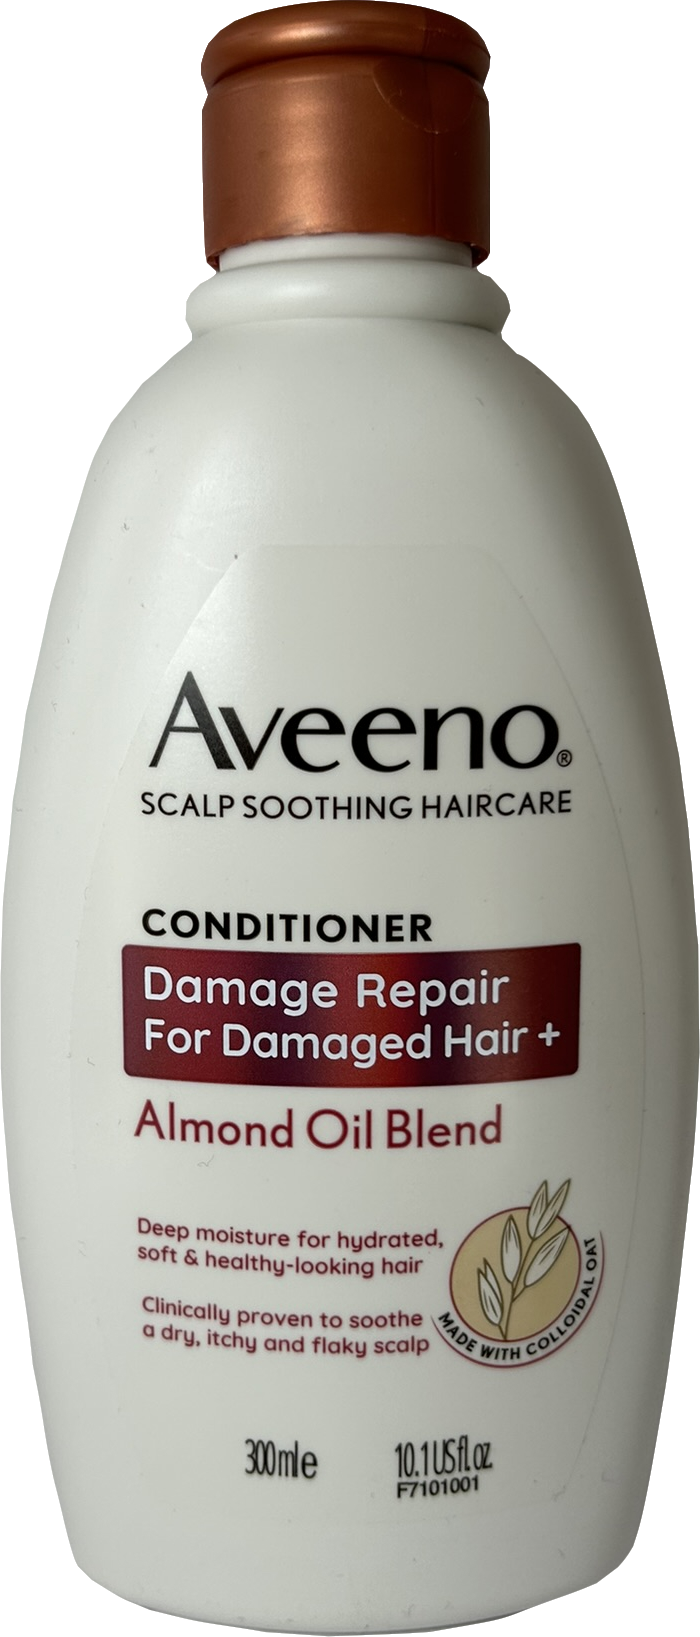 Aveeno Damage Repair+ Almond Oil Blend Conditioner 300ml